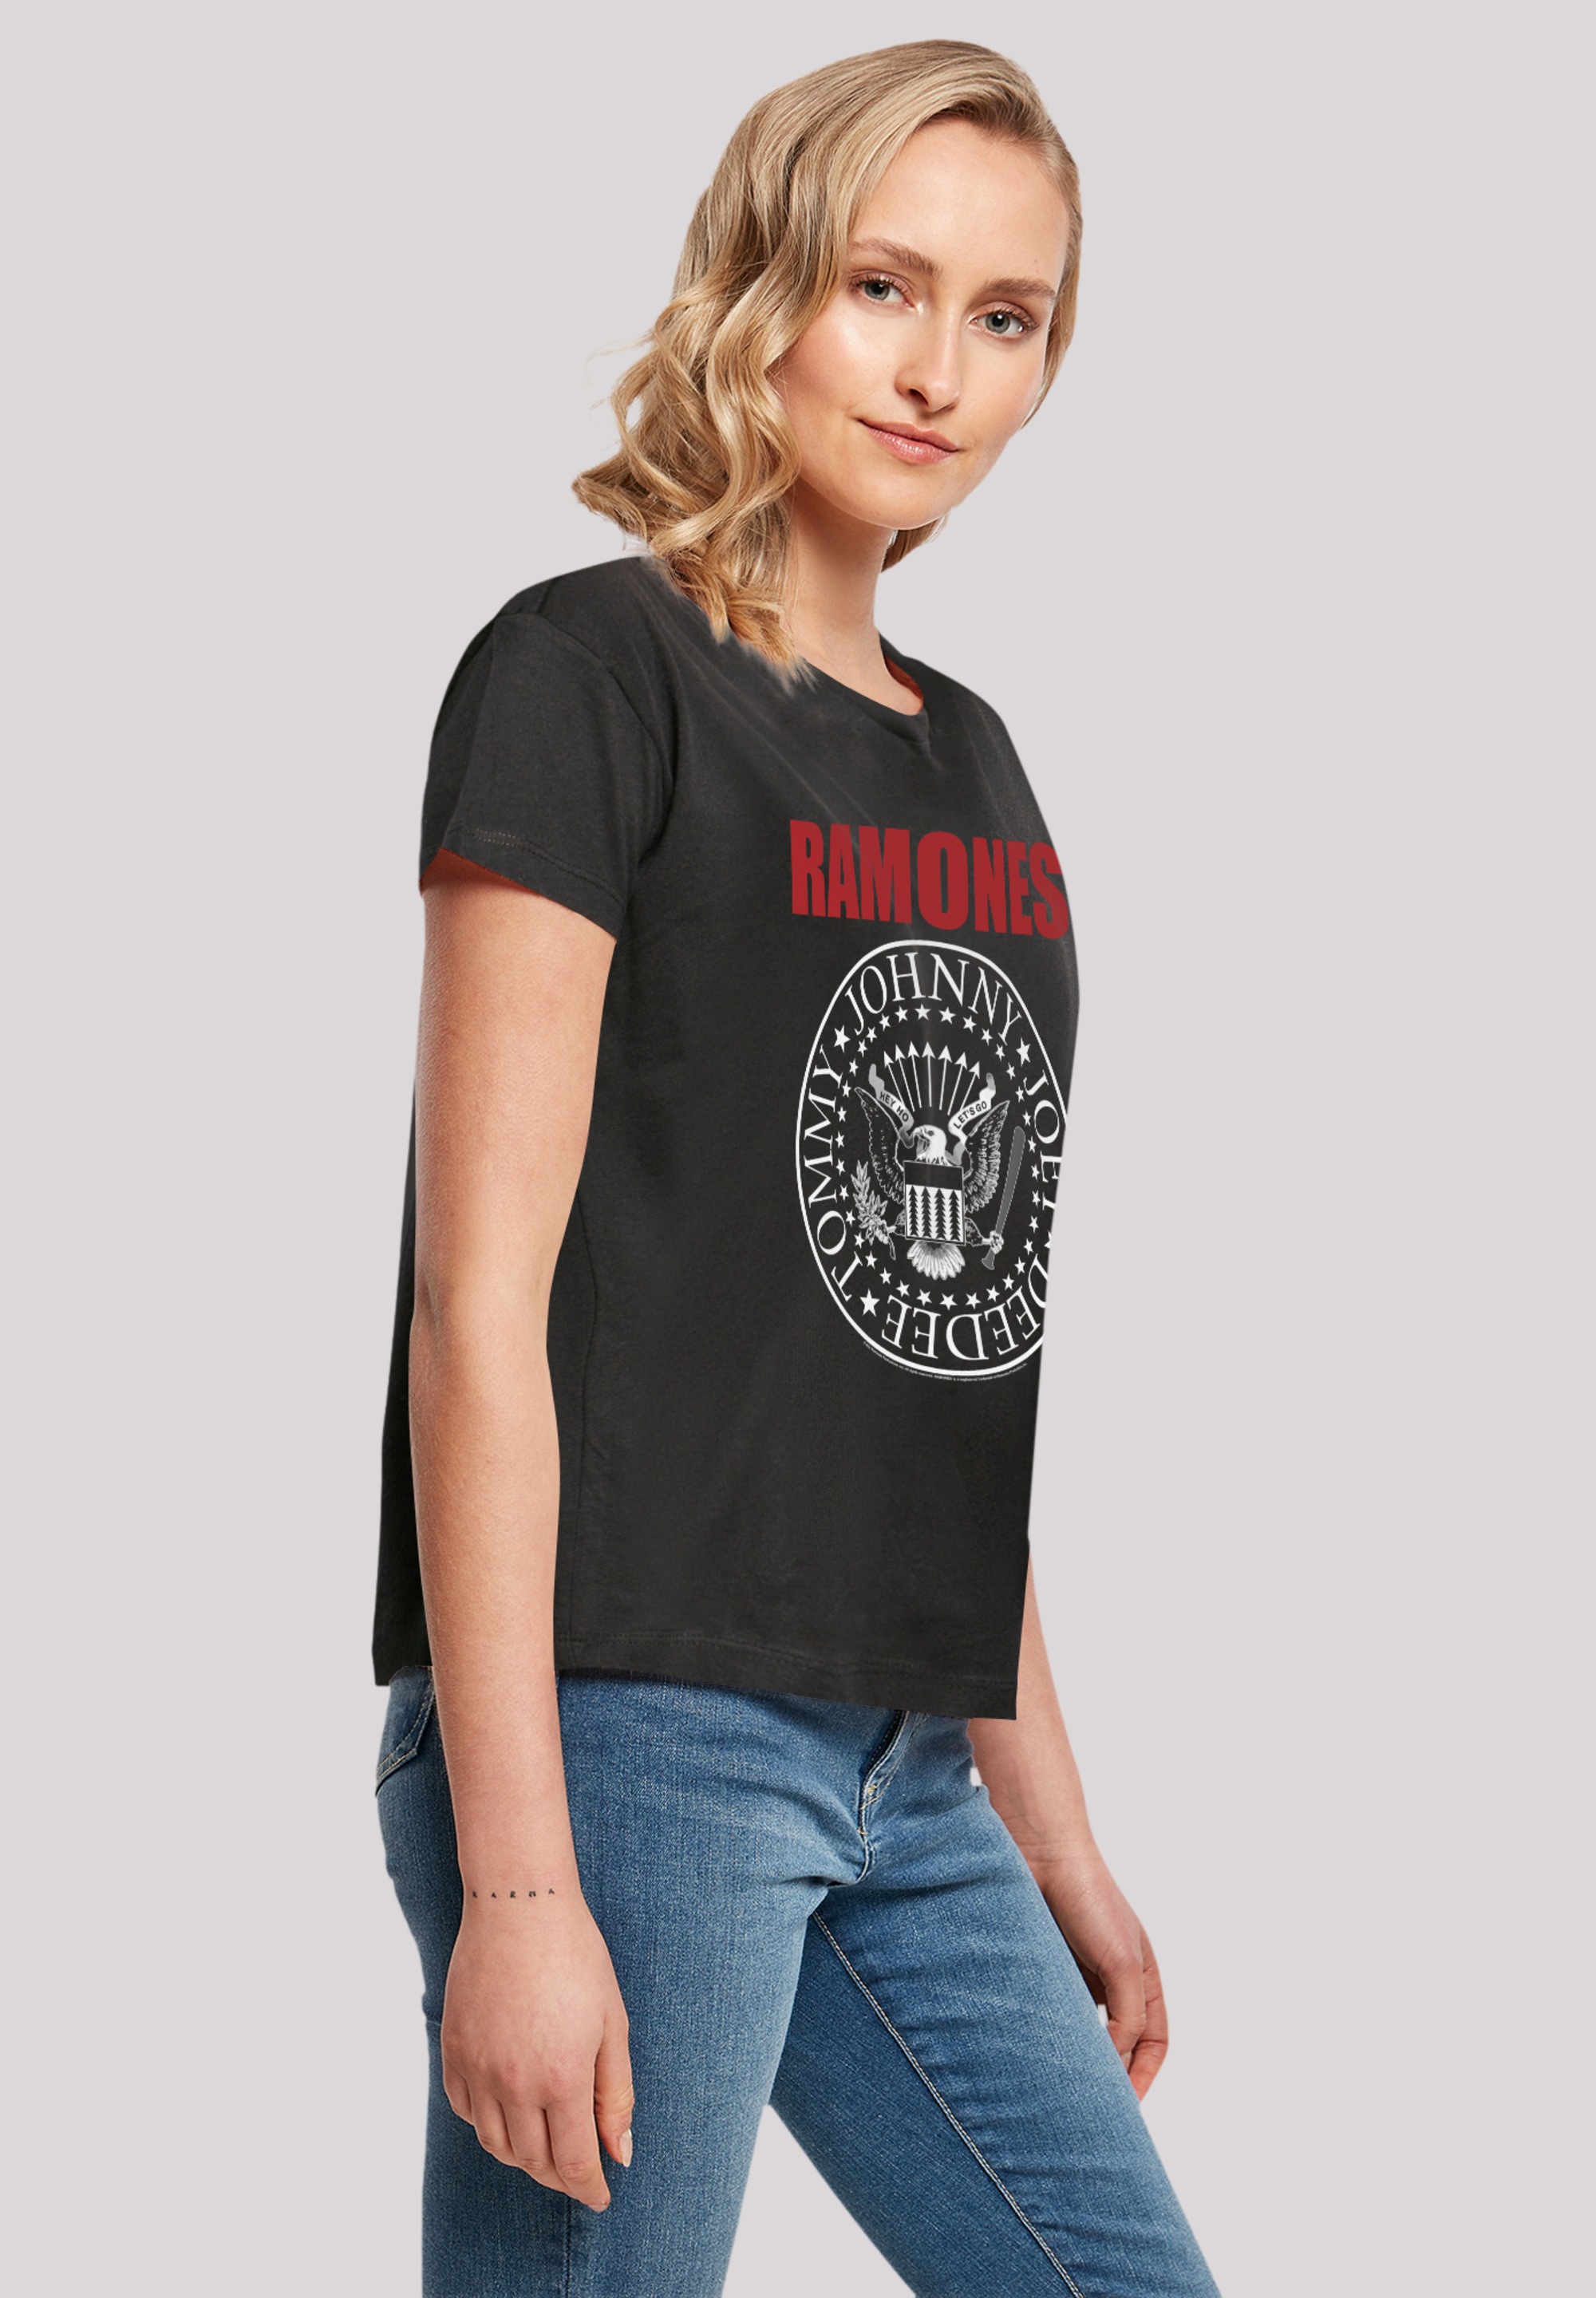 Text kaufen Rock Musik online Band Seal«, T-Shirt »Ramones Premium Red | F4NT4STIC Rock-Musik I\'m Qualität, walking Band,